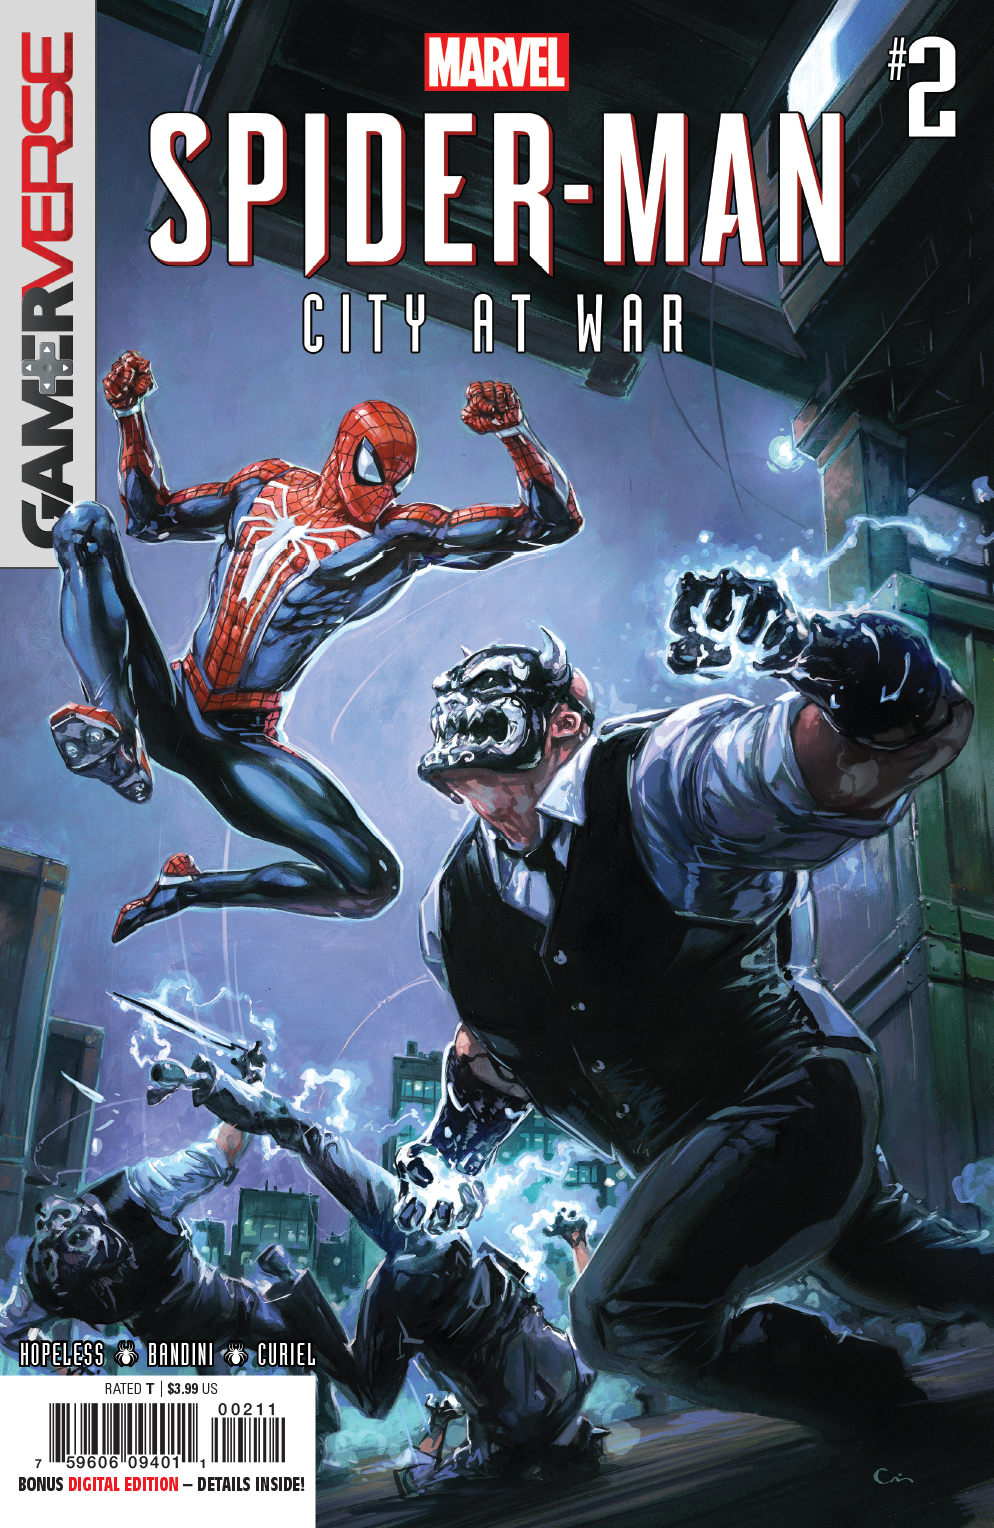 SPIDER-MAN CITY AT WAR #2 (OF 6)